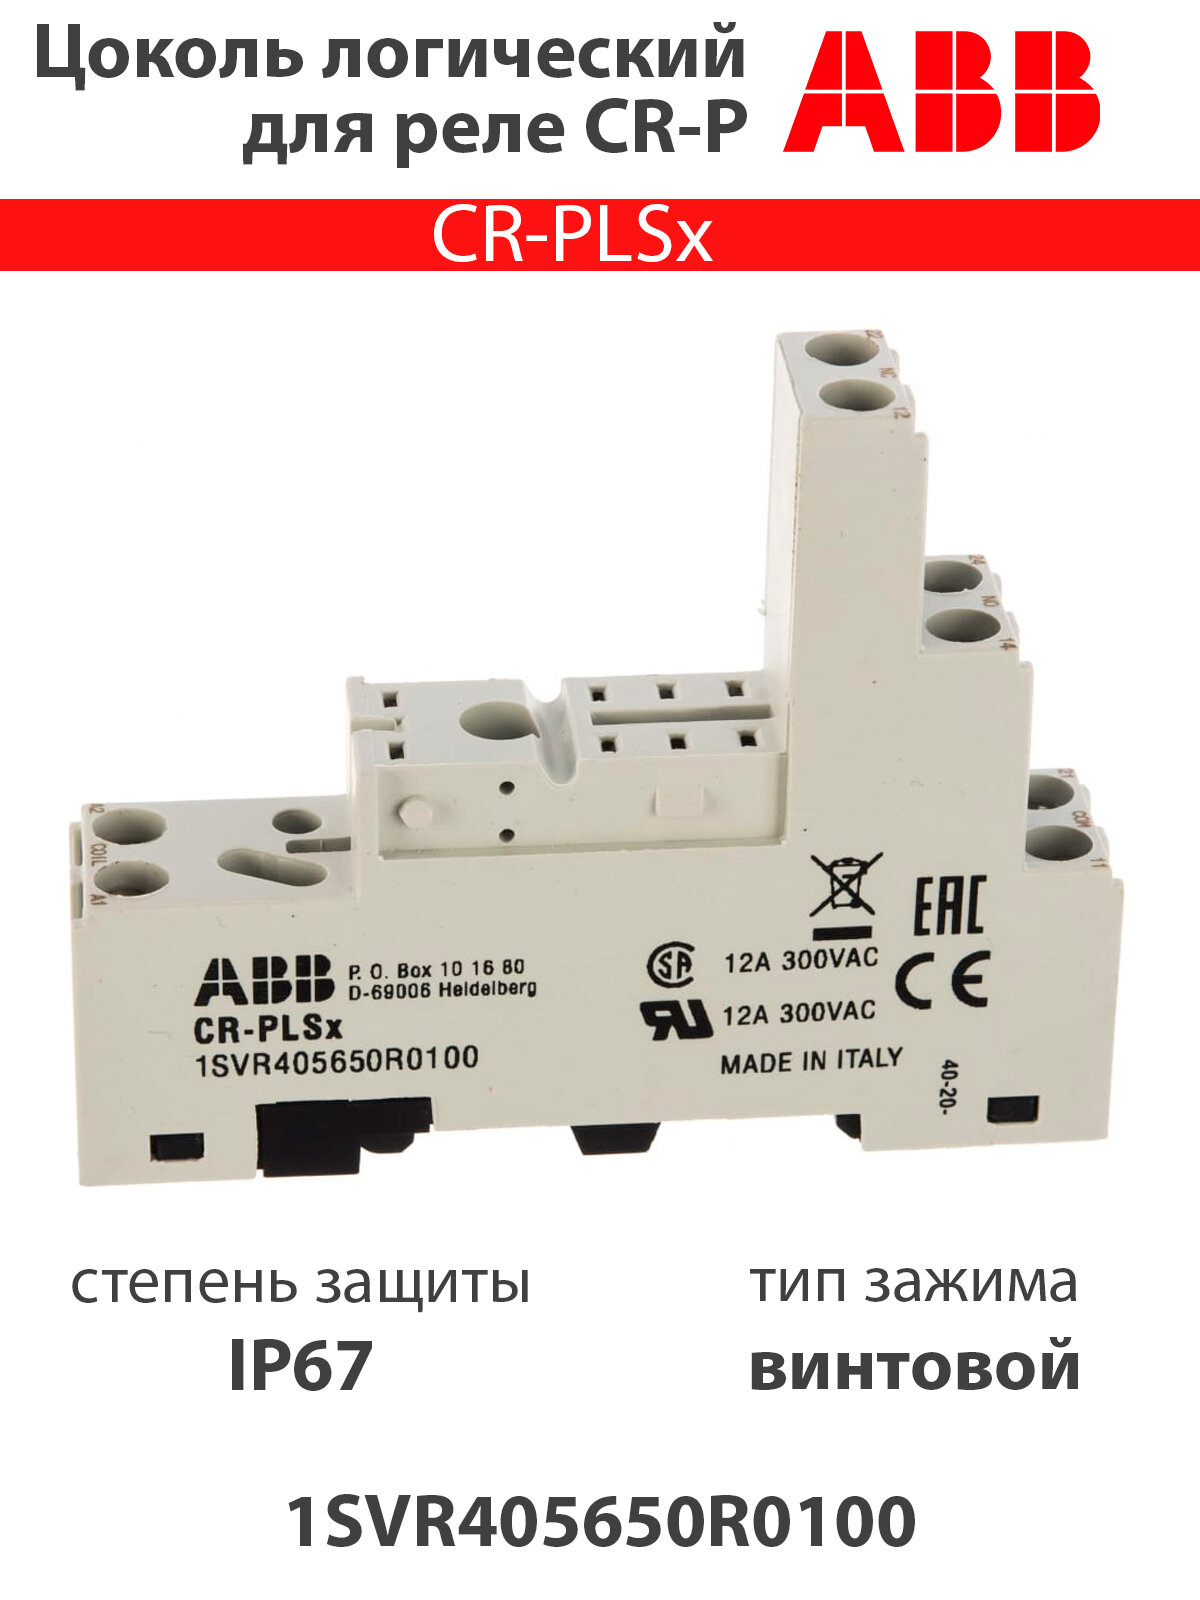 Цоколь CR-PLSх (логический) для реле CR-P 1SVR405650R0100